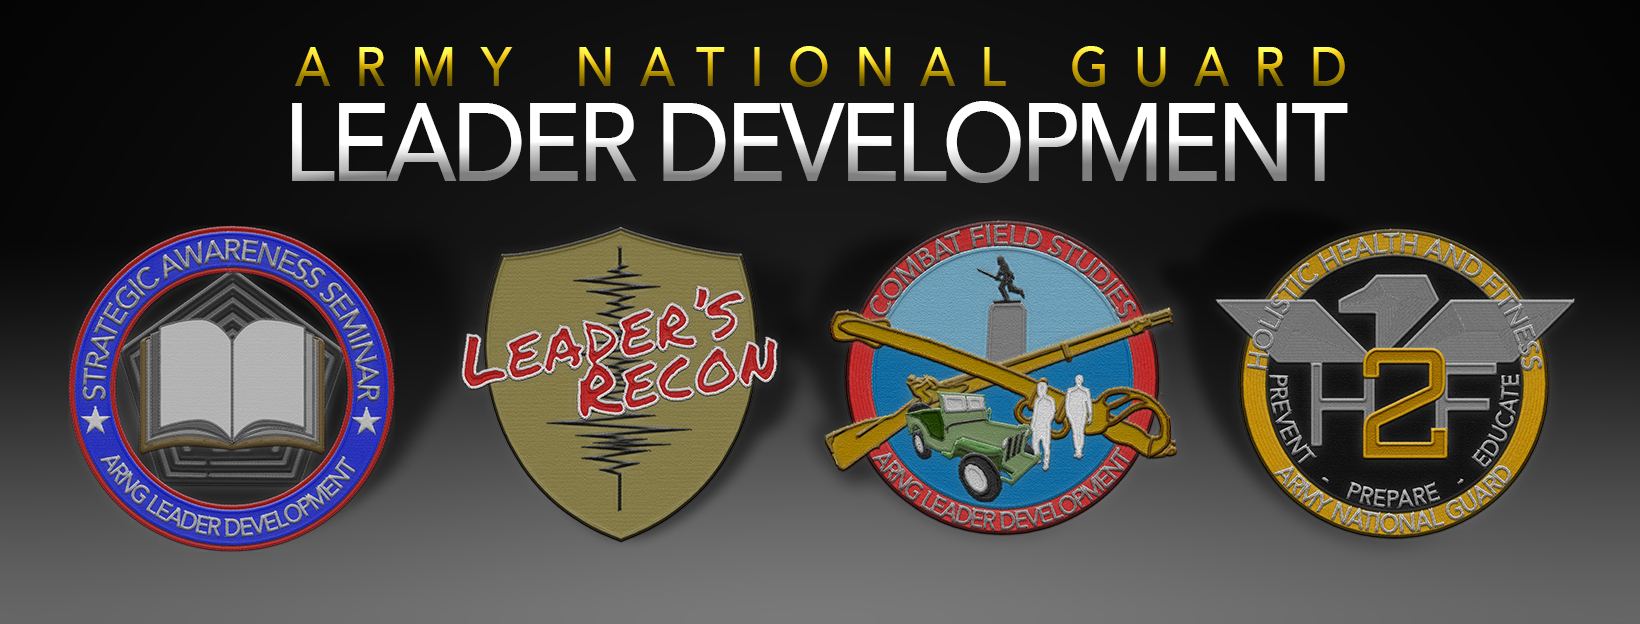 Army National Guard Leader Development Program